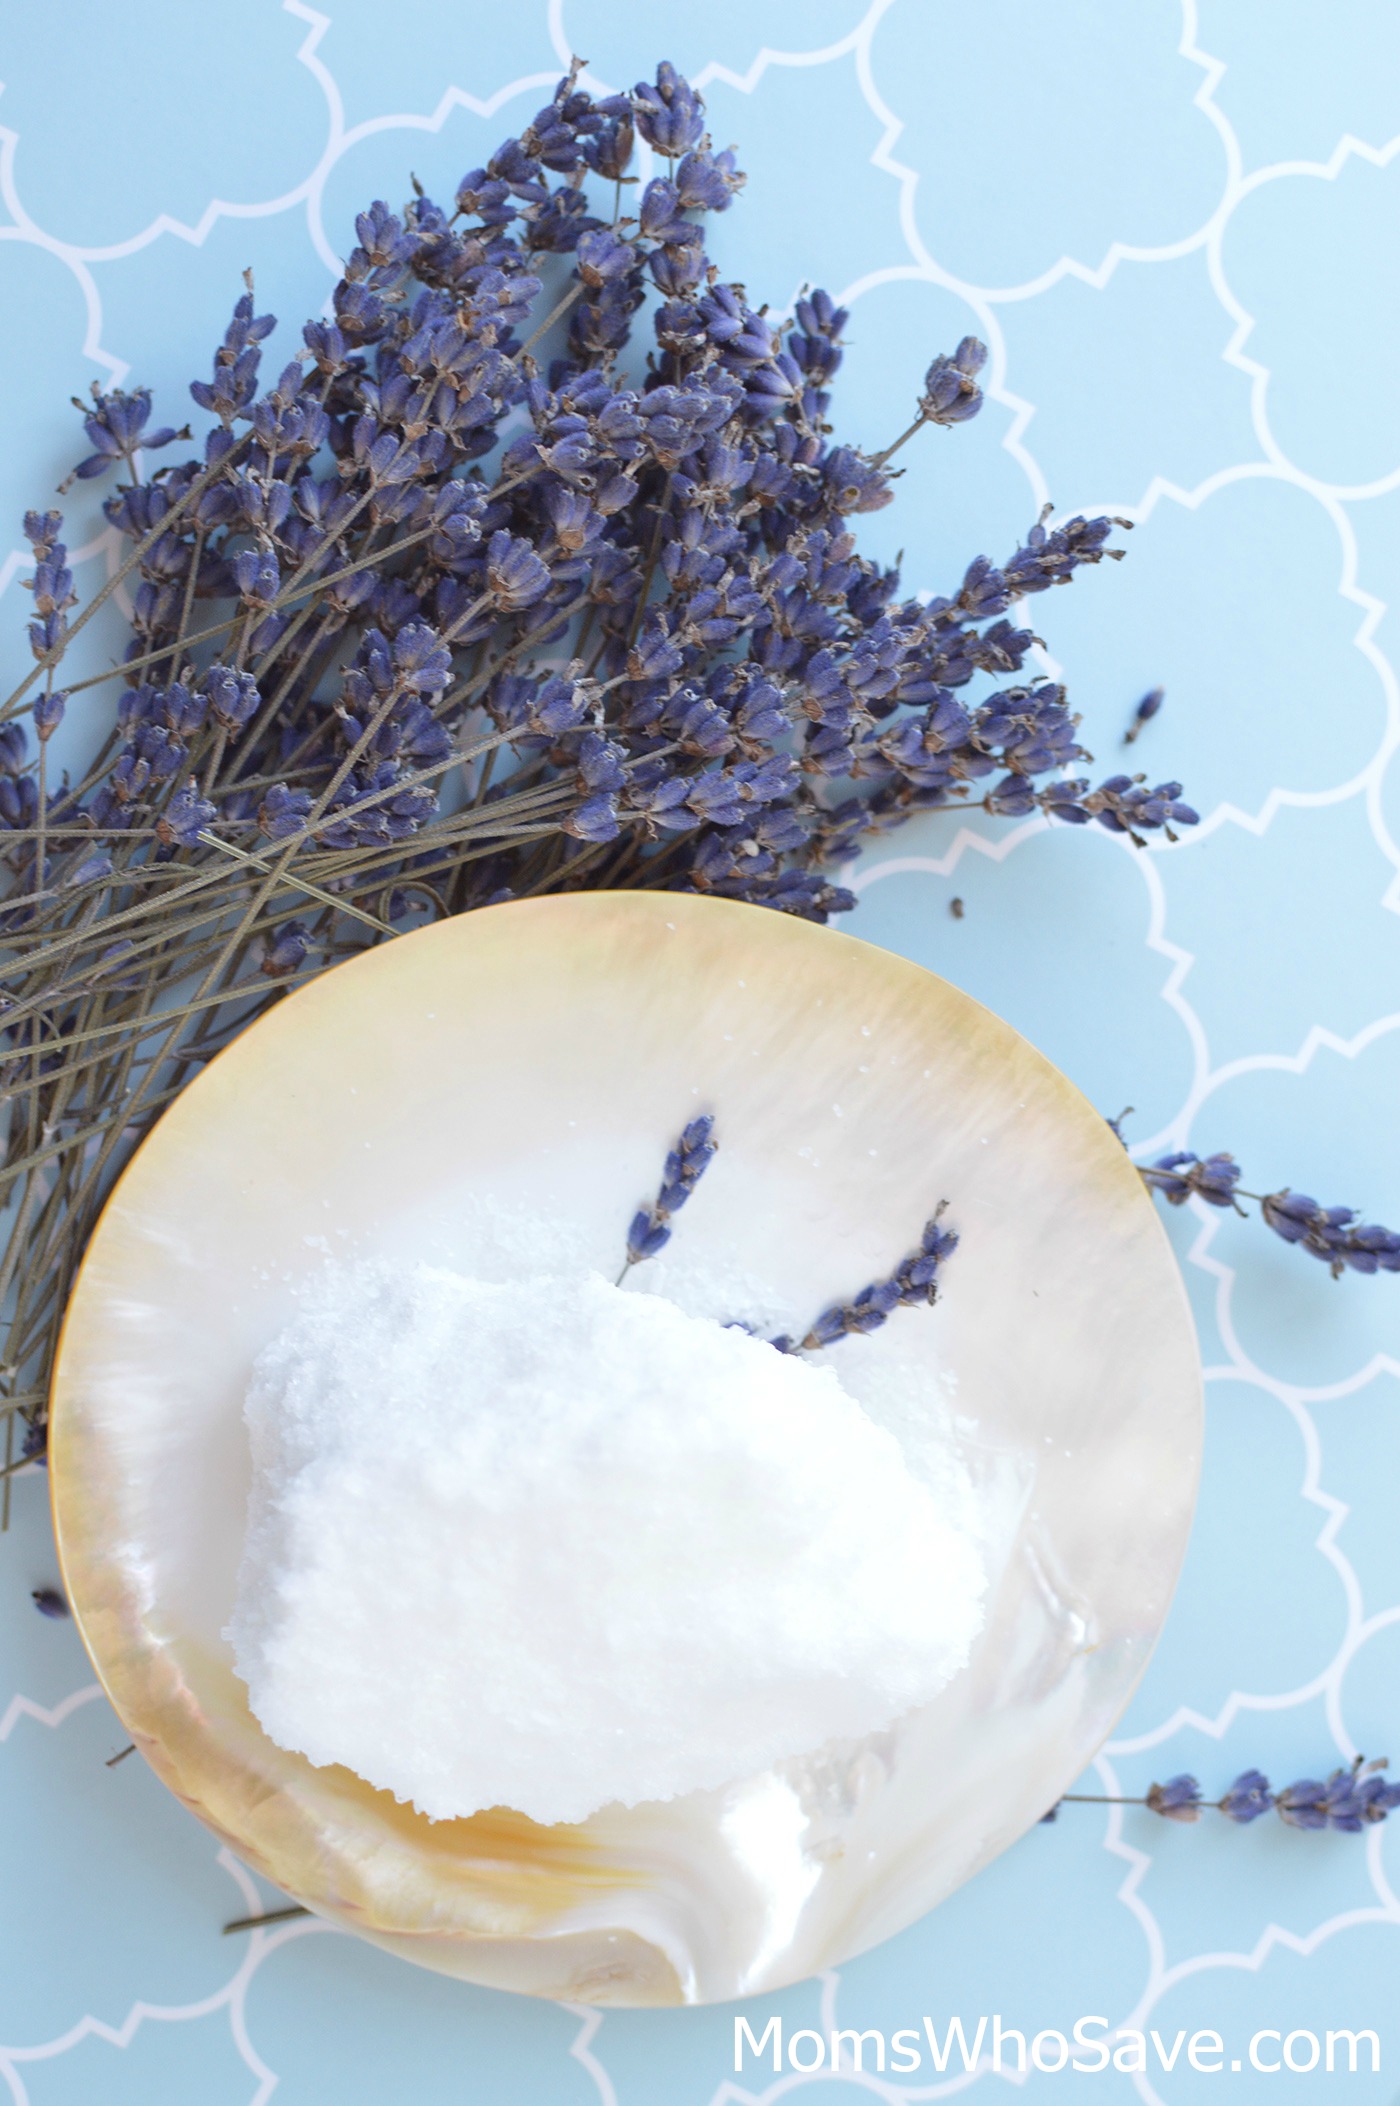 Relaxing Lavender Bath Soak